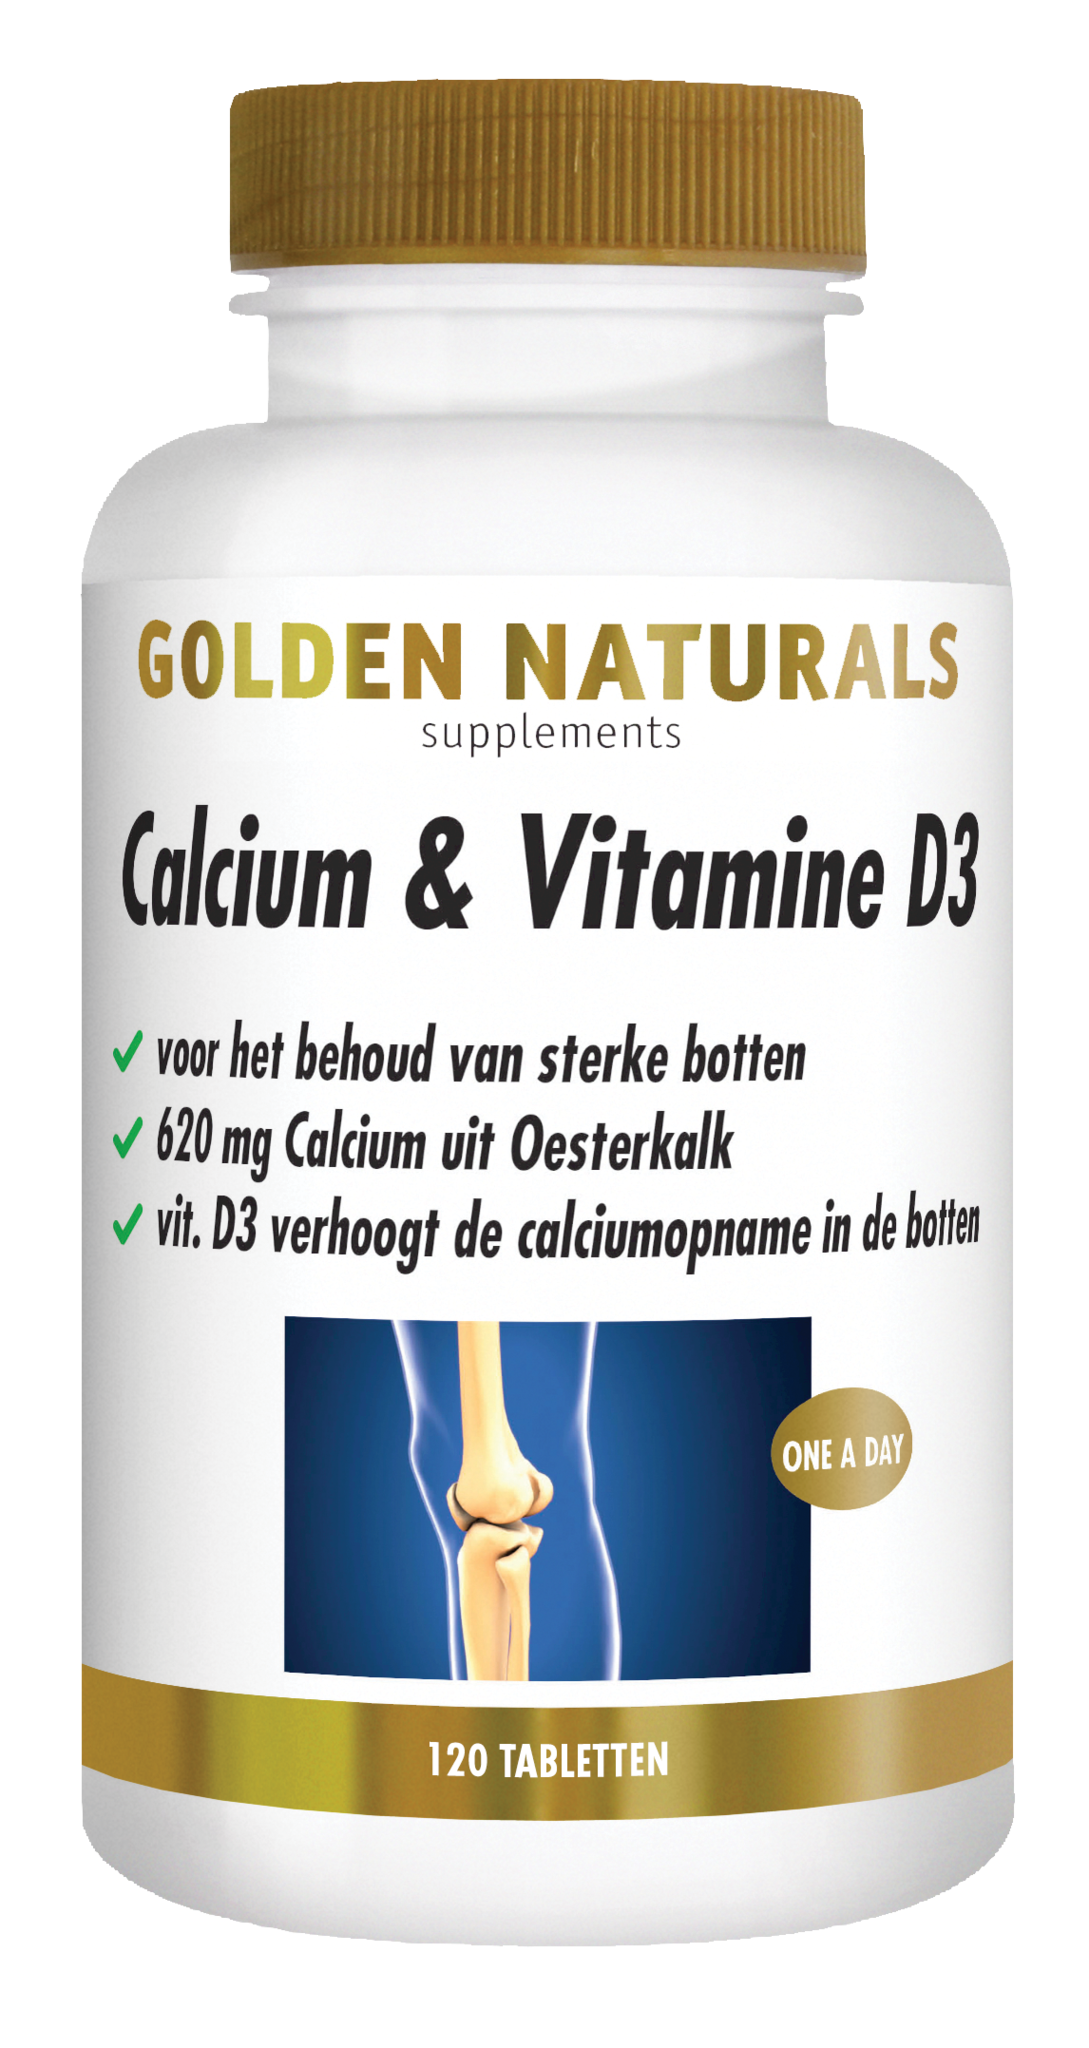 Golden Naturals Golden Naturals Calcium & Vitamin D3 (120 Tabletten)